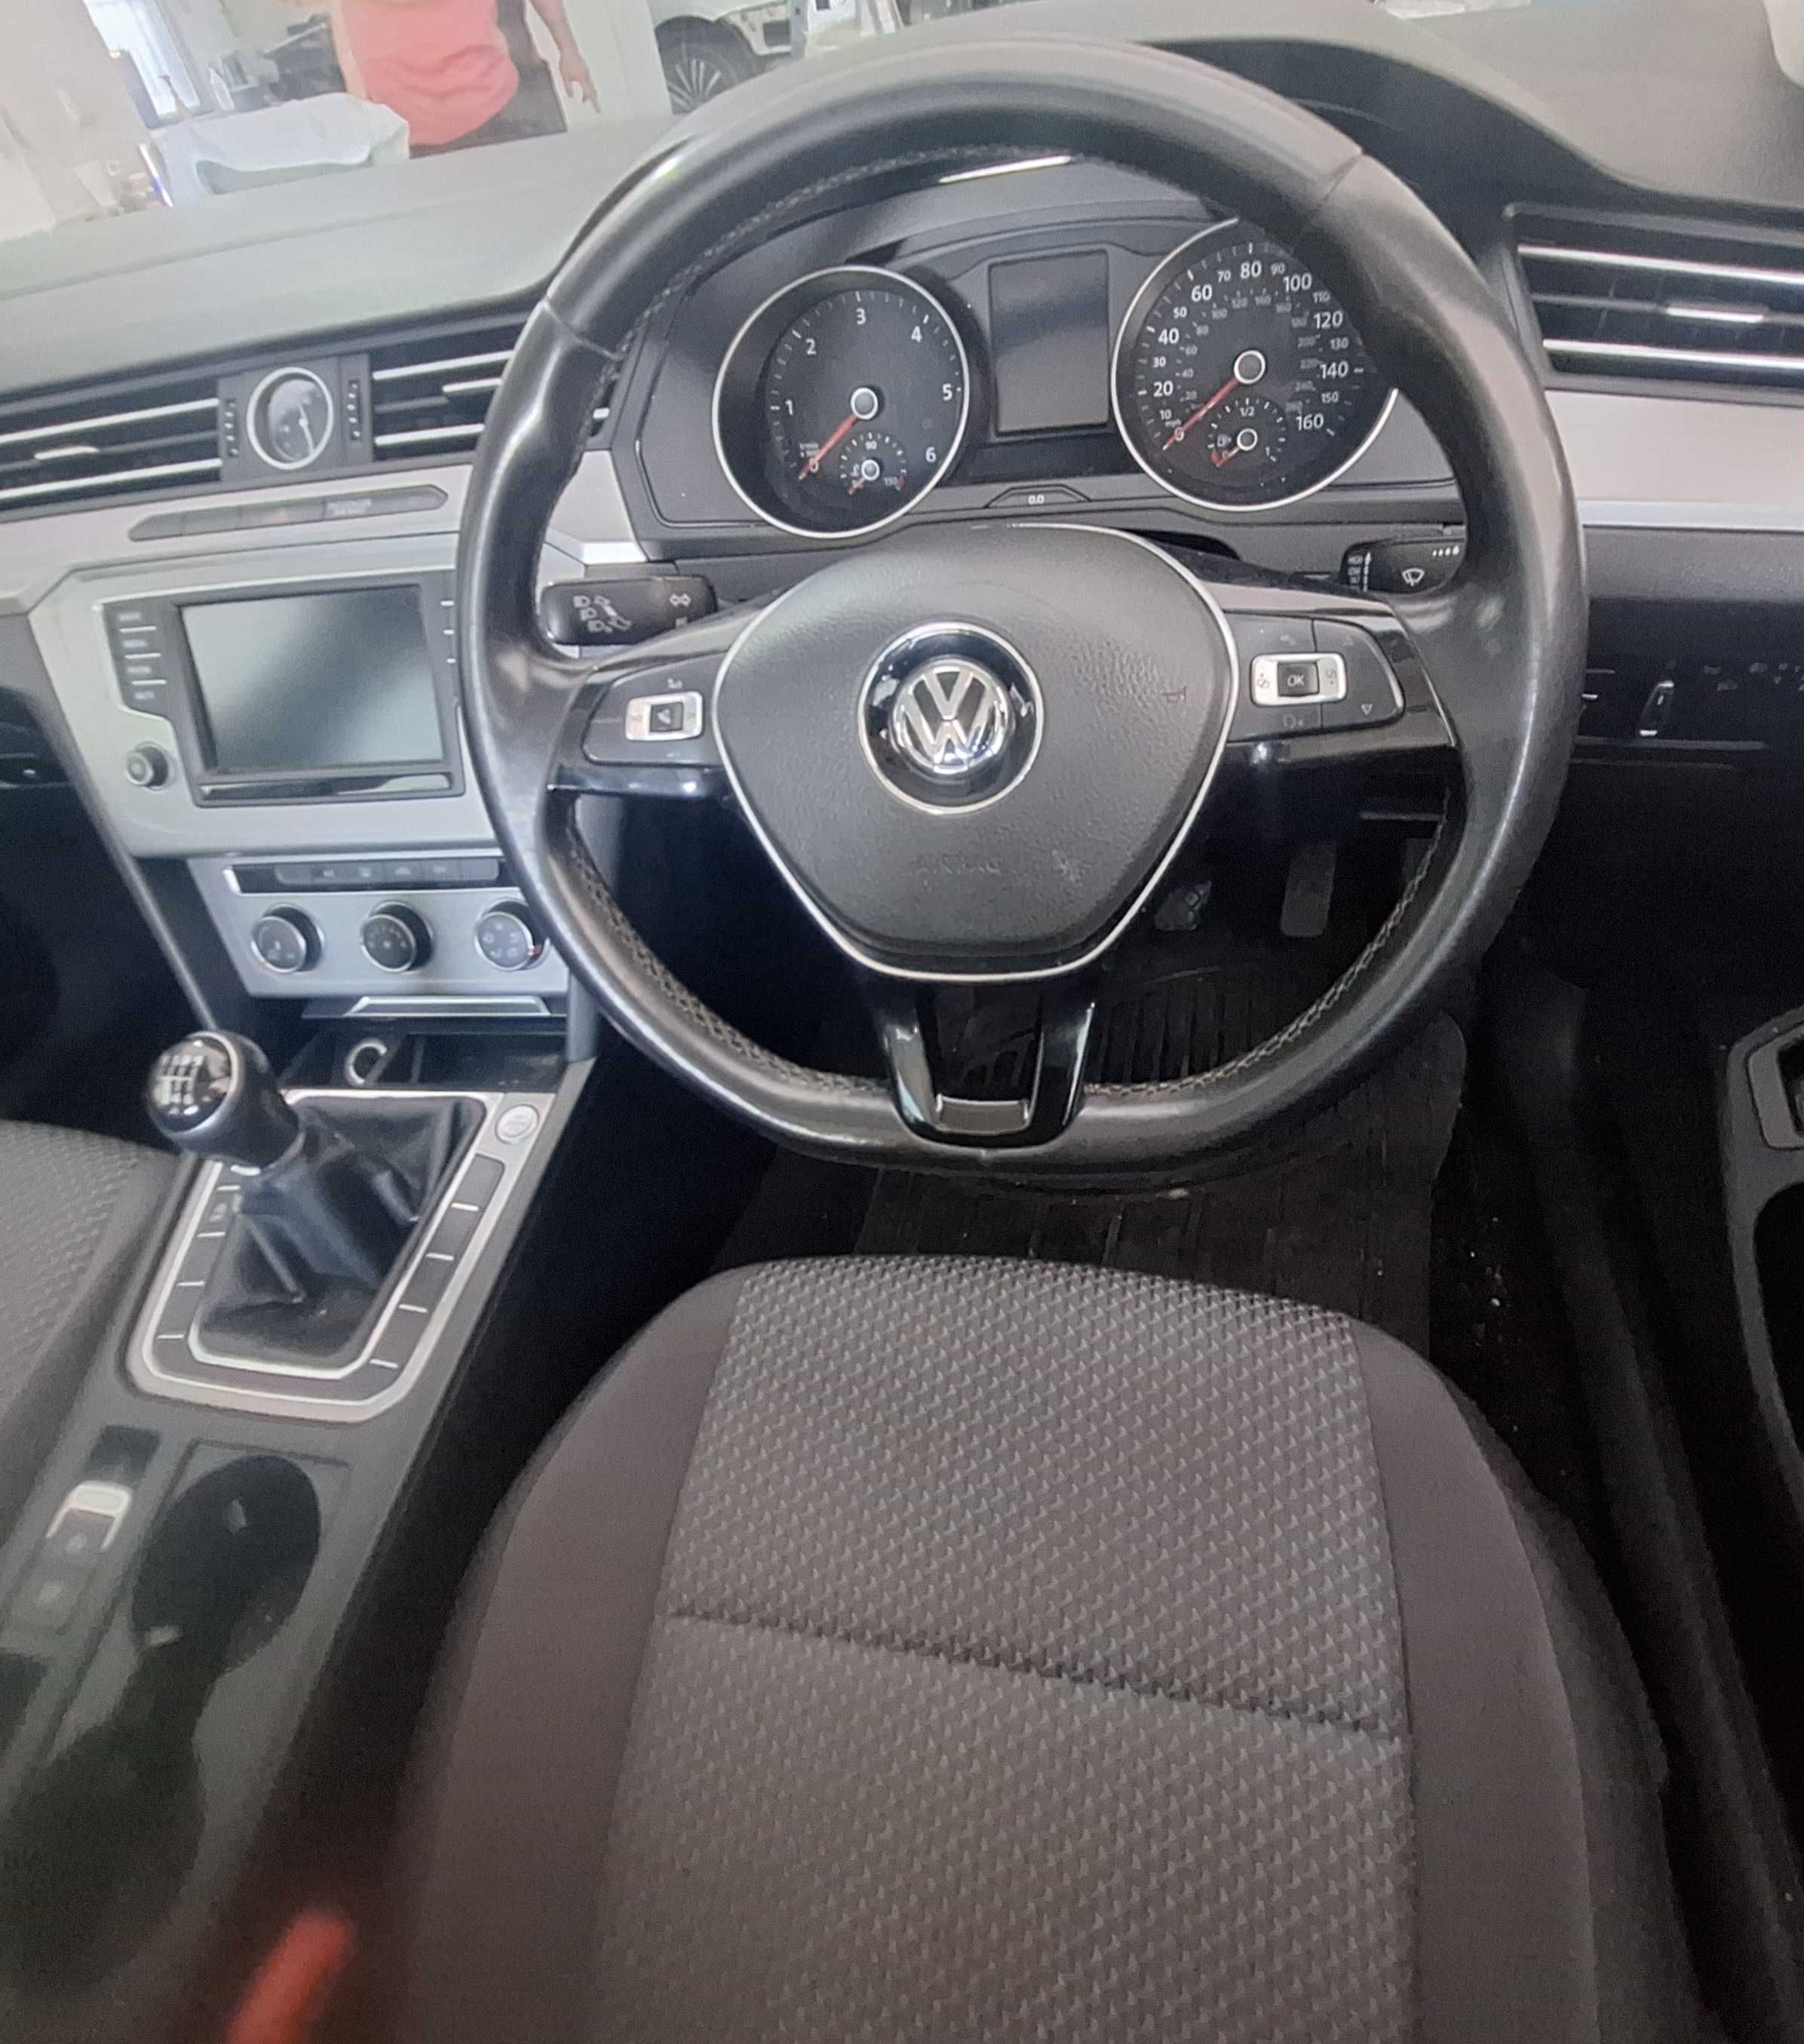 Dezmembrez VW PASSAT B8 1.6 TDI BREAK model 2014-2020